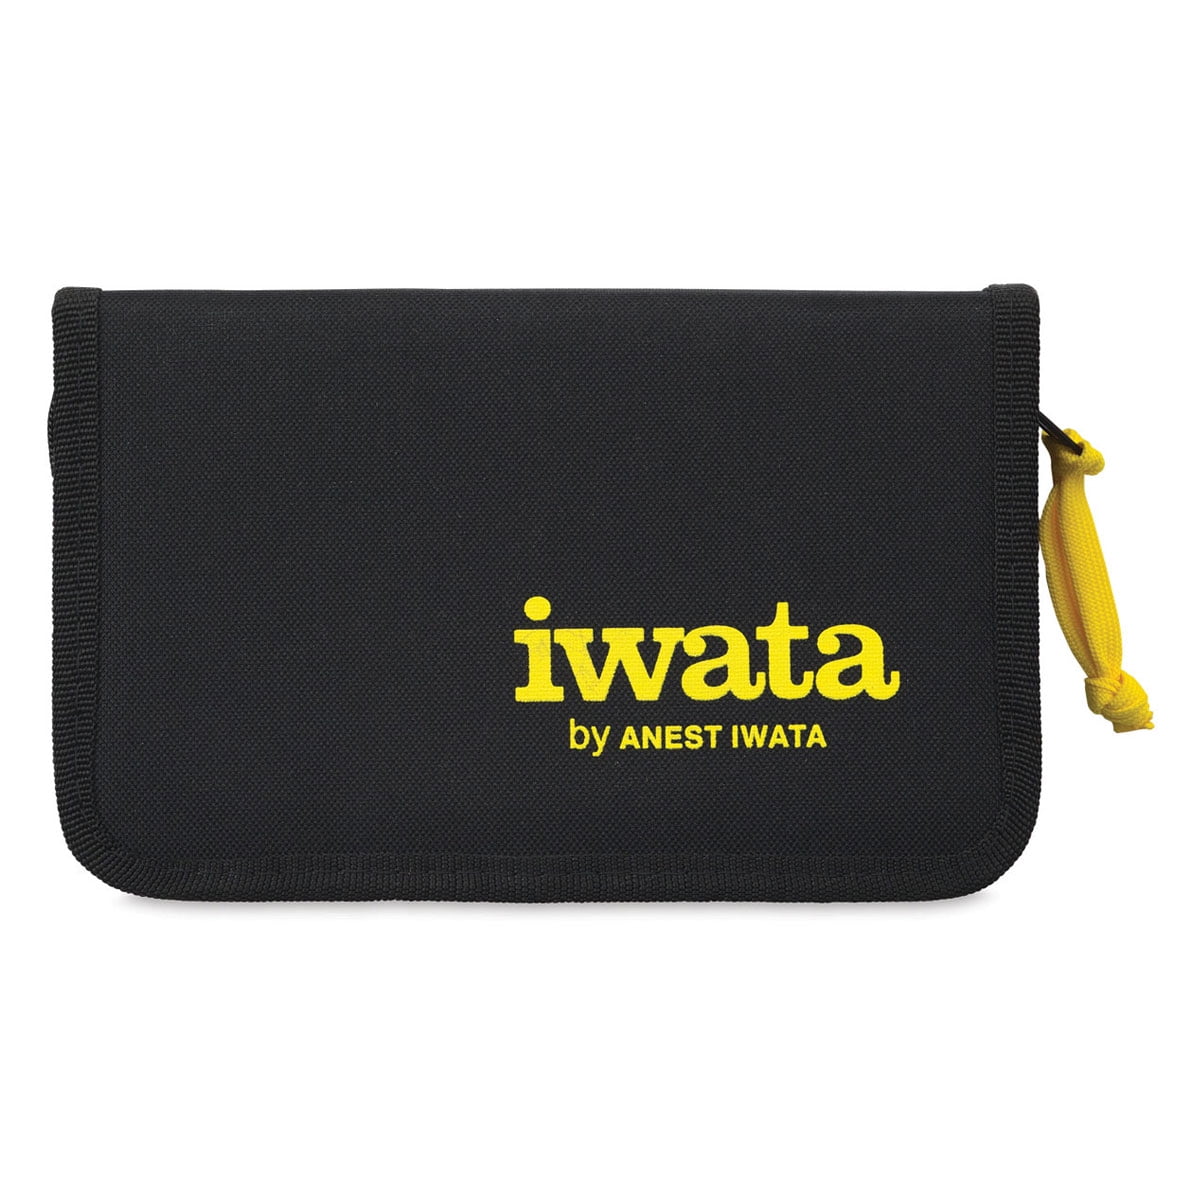 Iwata Zippered Airbrush Case  Walmart com Walmart com